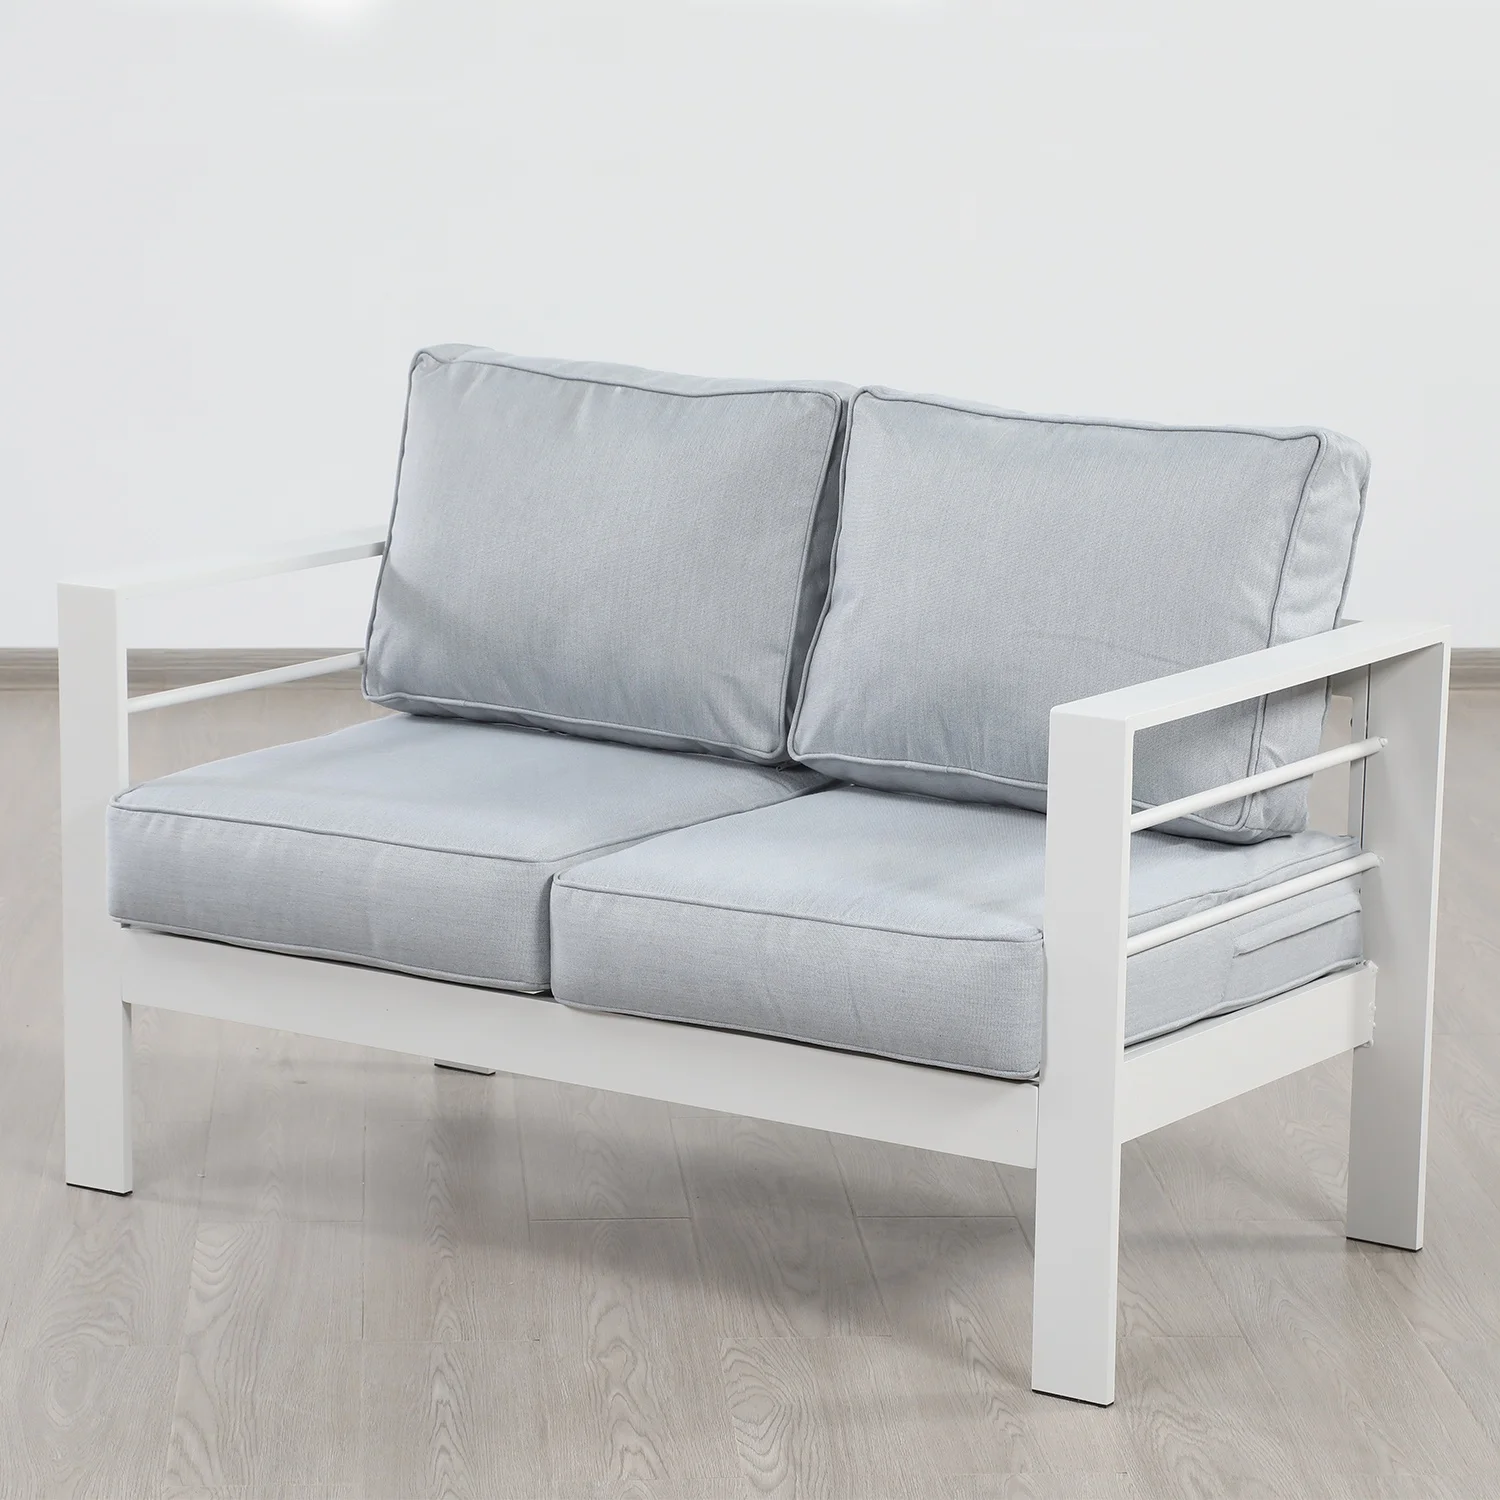 New Coming Ningbo Outdoor Sofa Set Elegant Aluminum Style Outside Garden Patio Furniture